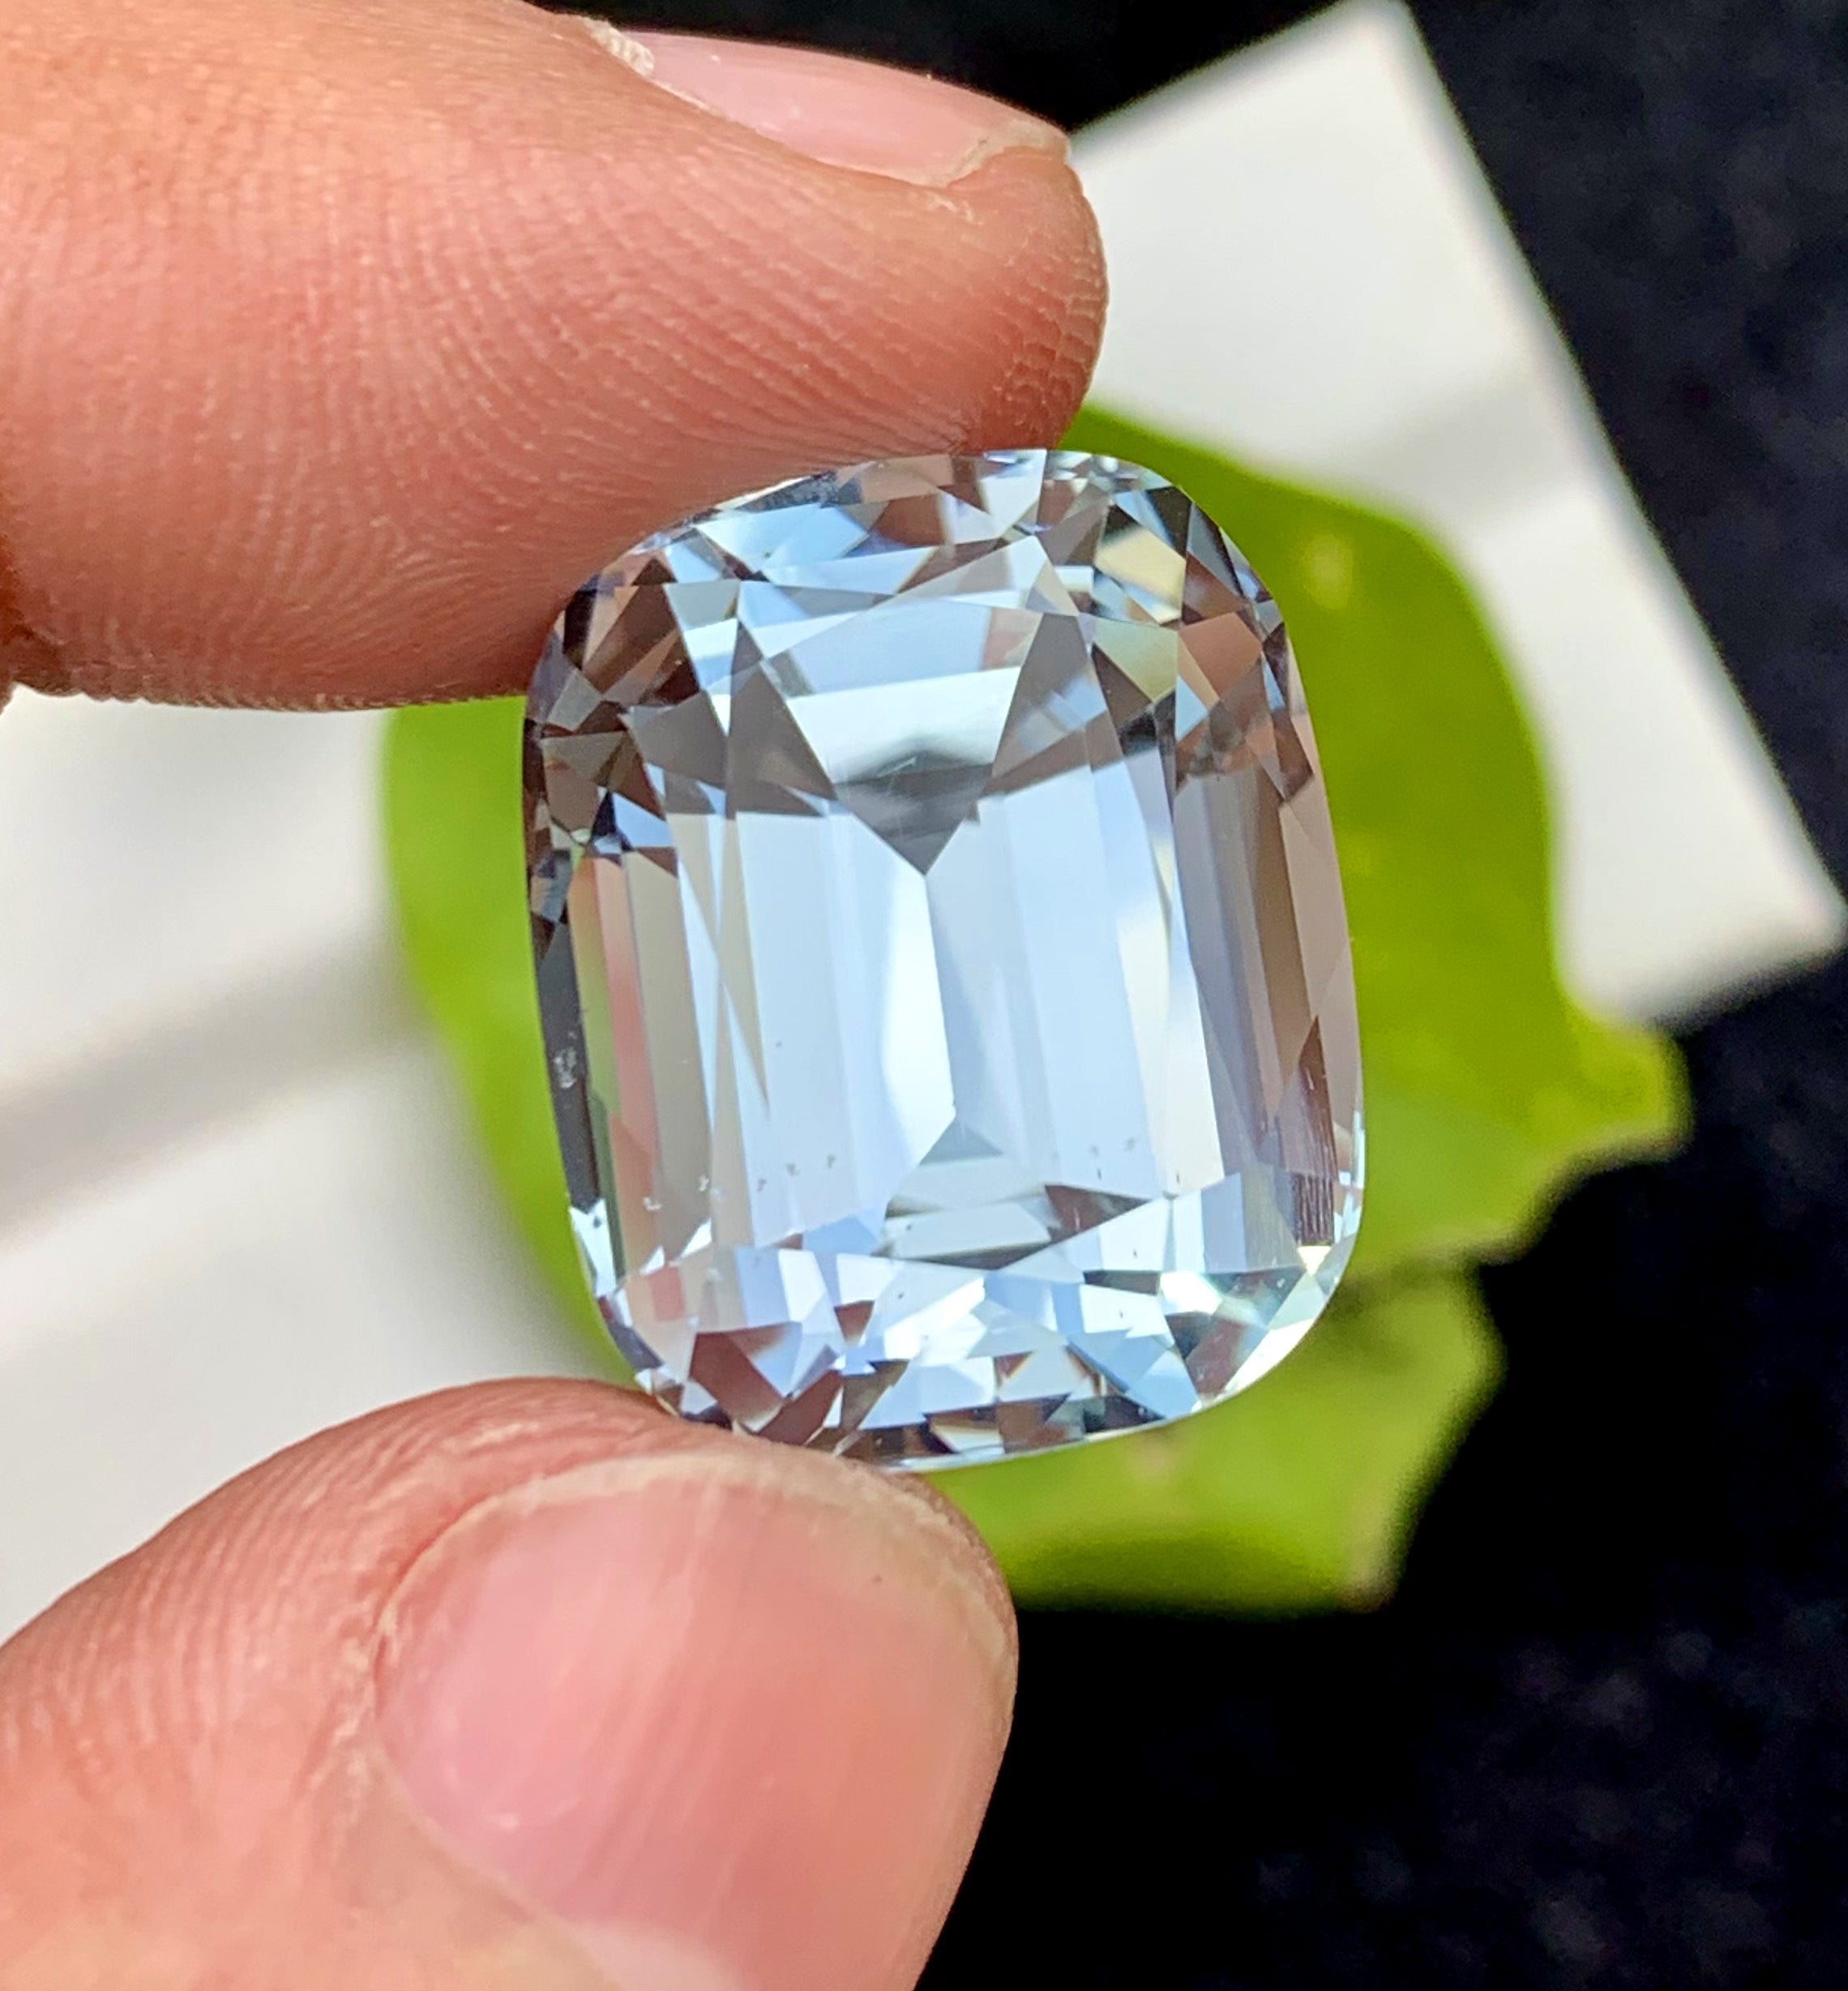 Cusshion Cut Natural Aquamarne Gemstone, Loose Gemstone, Aqua Faceted Cut Stone, Gemstone Jewelry - 27.70 CT